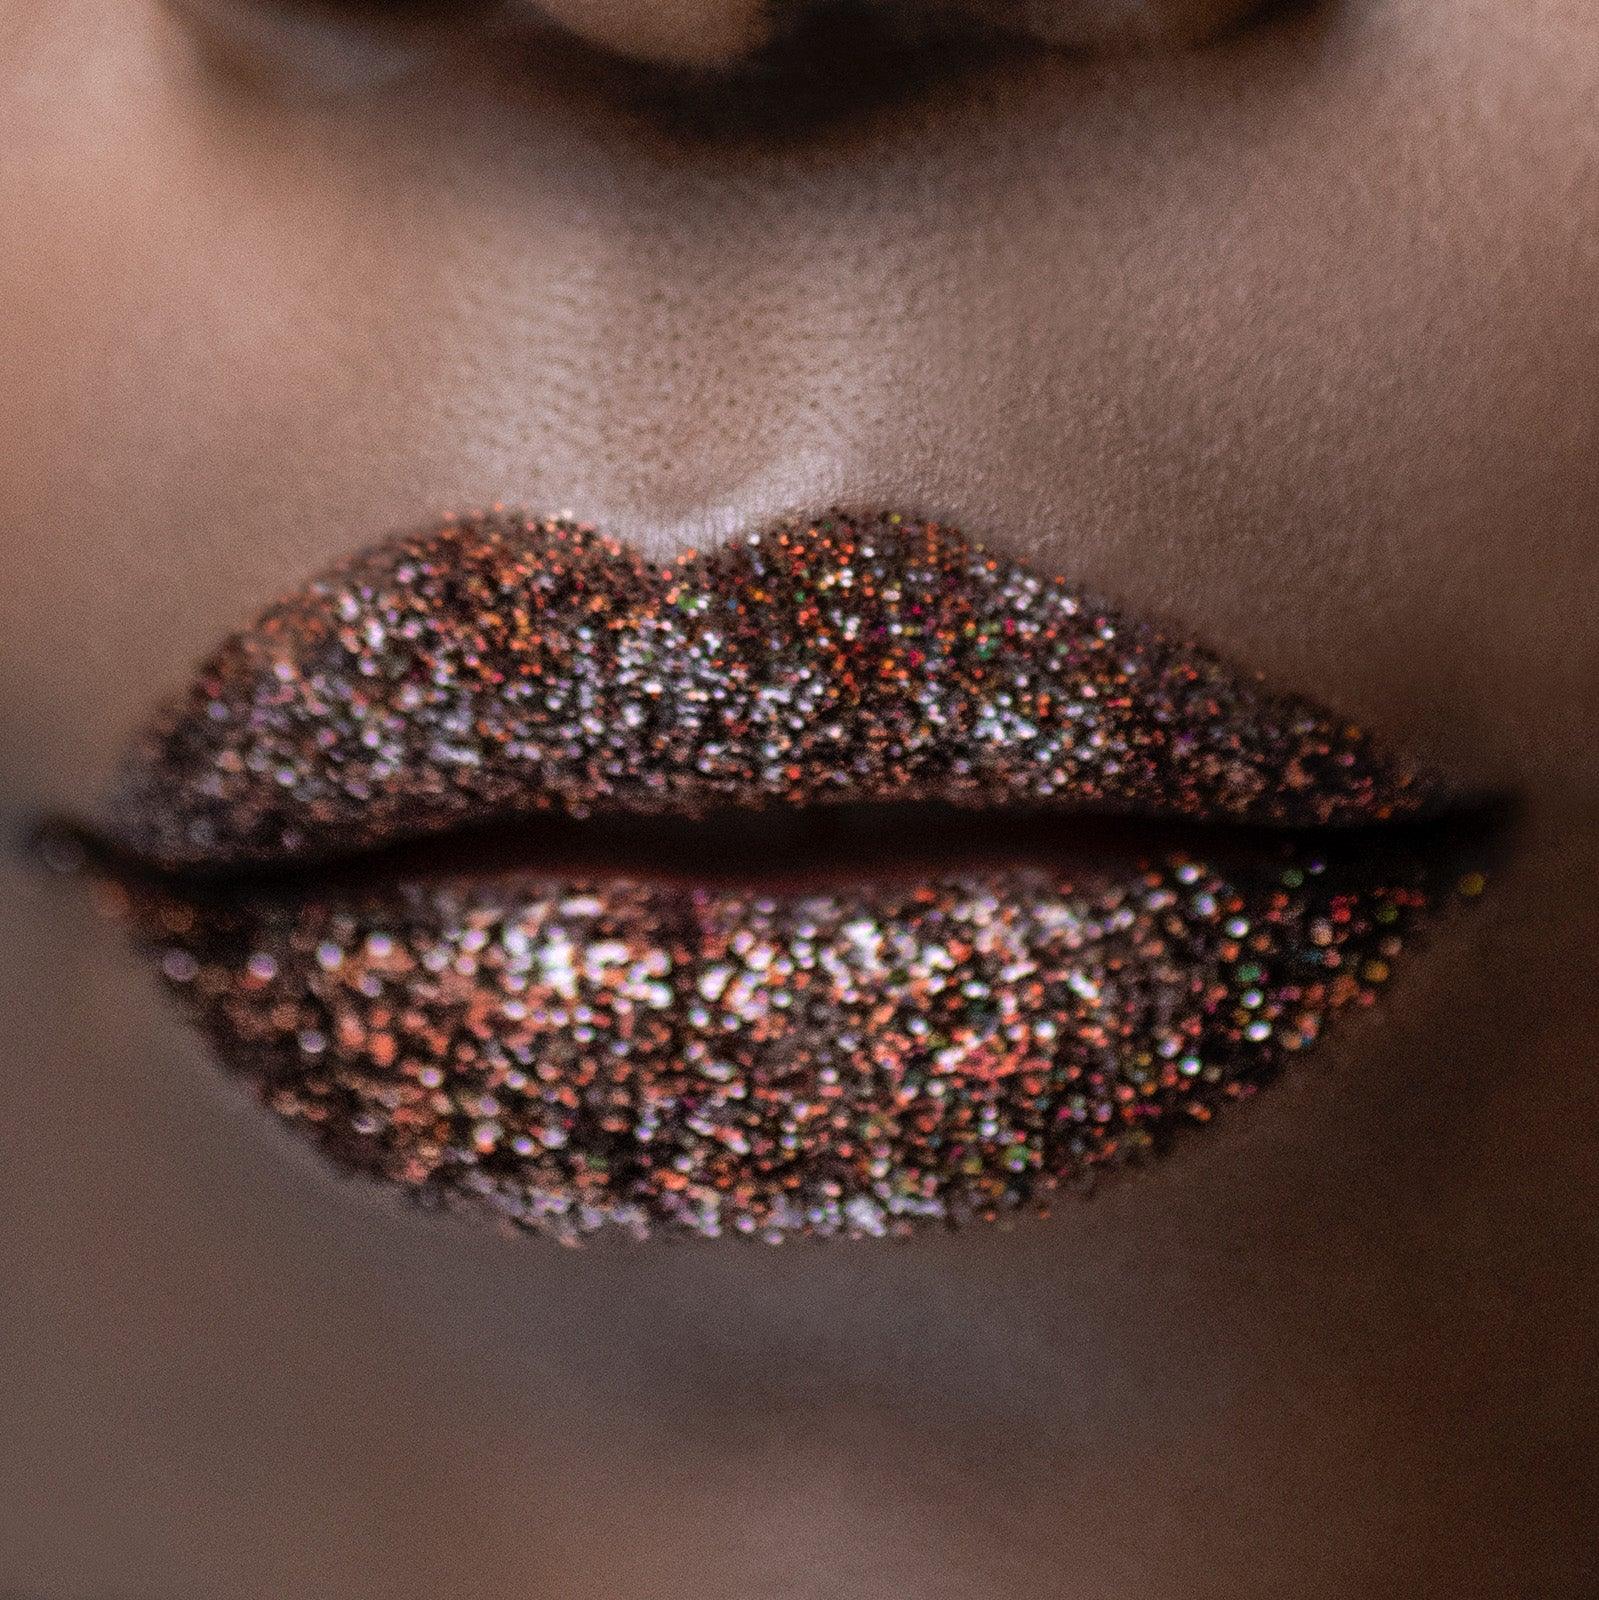 Vamp Glitter Lip Kit – Stay Golden Cosmetics